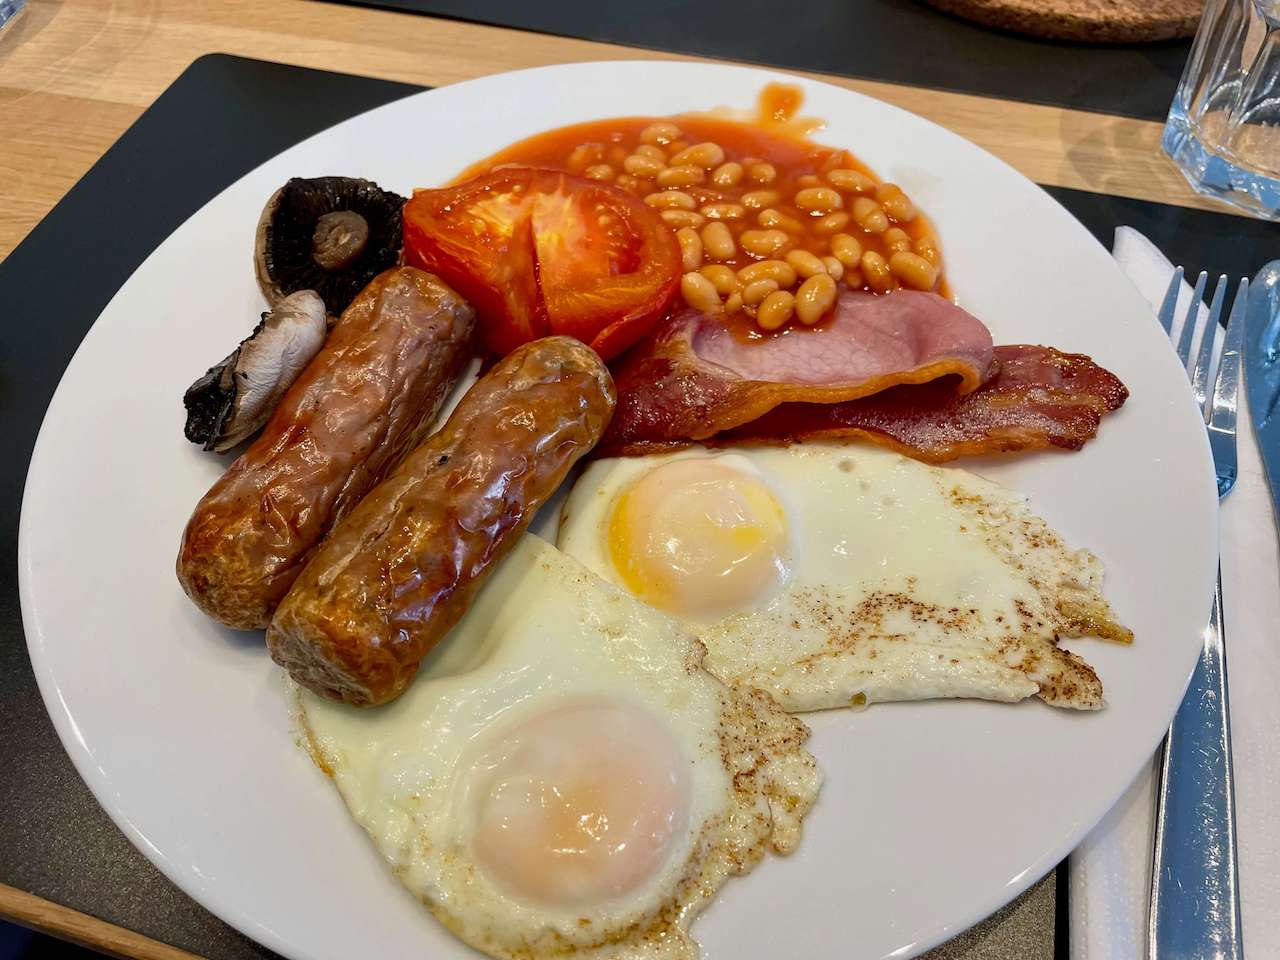 UK, London - Full English Breakfast